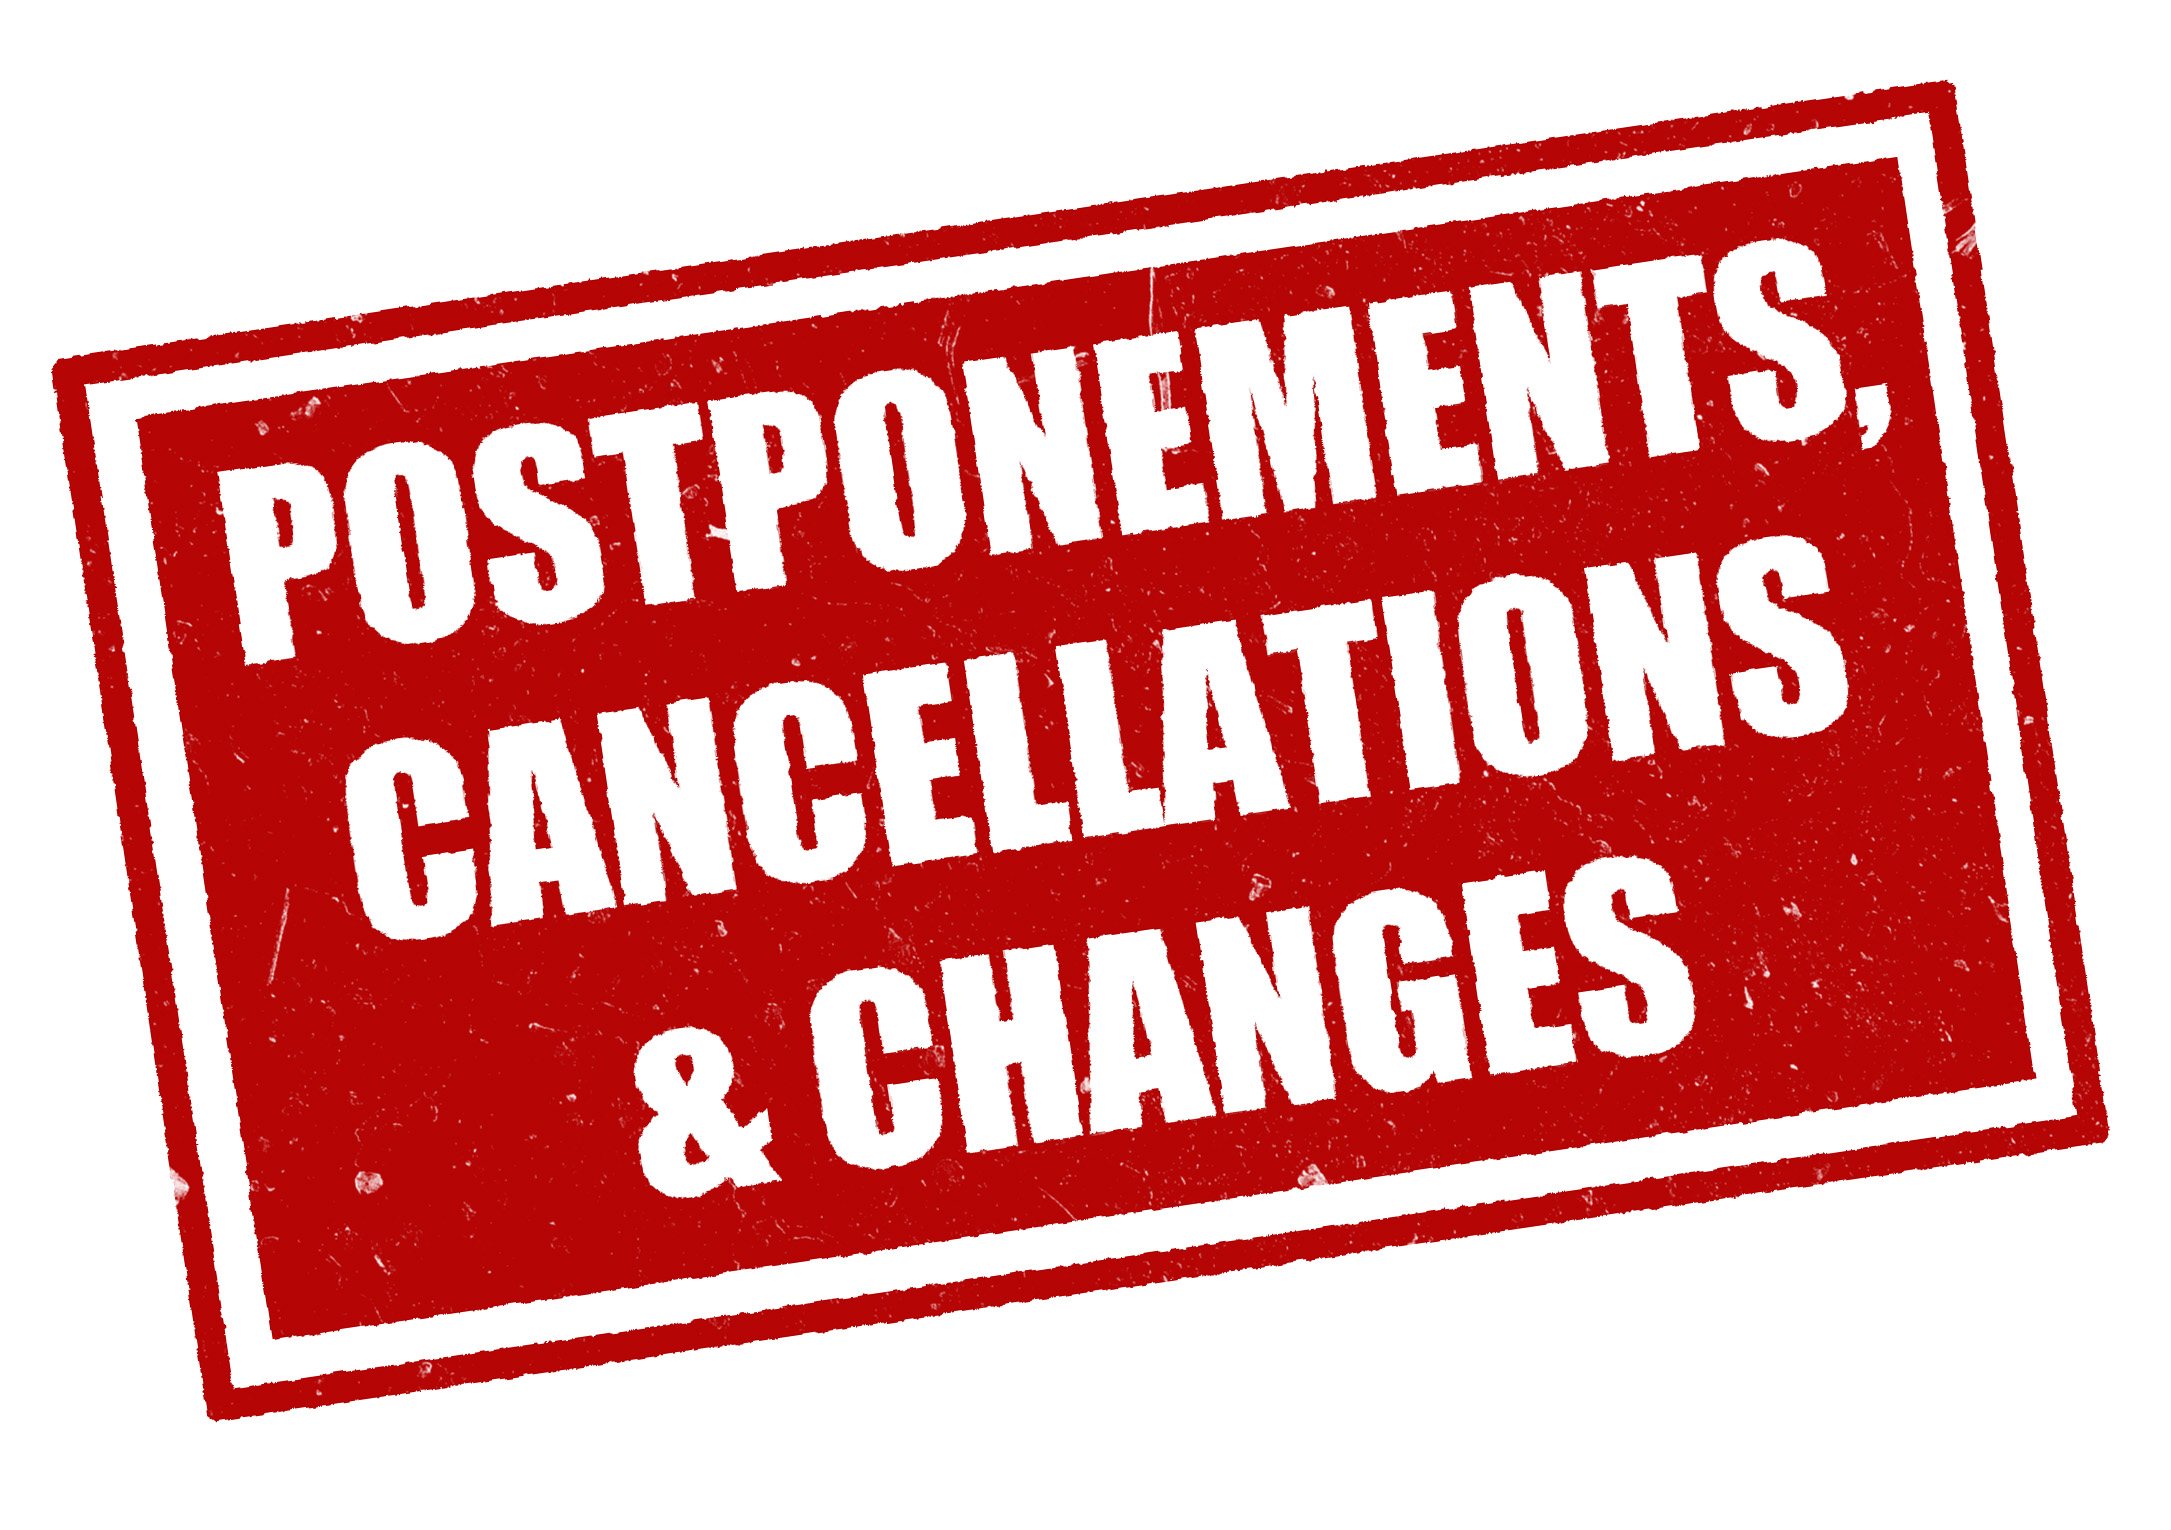 Postponements Changes Stamp.jpg